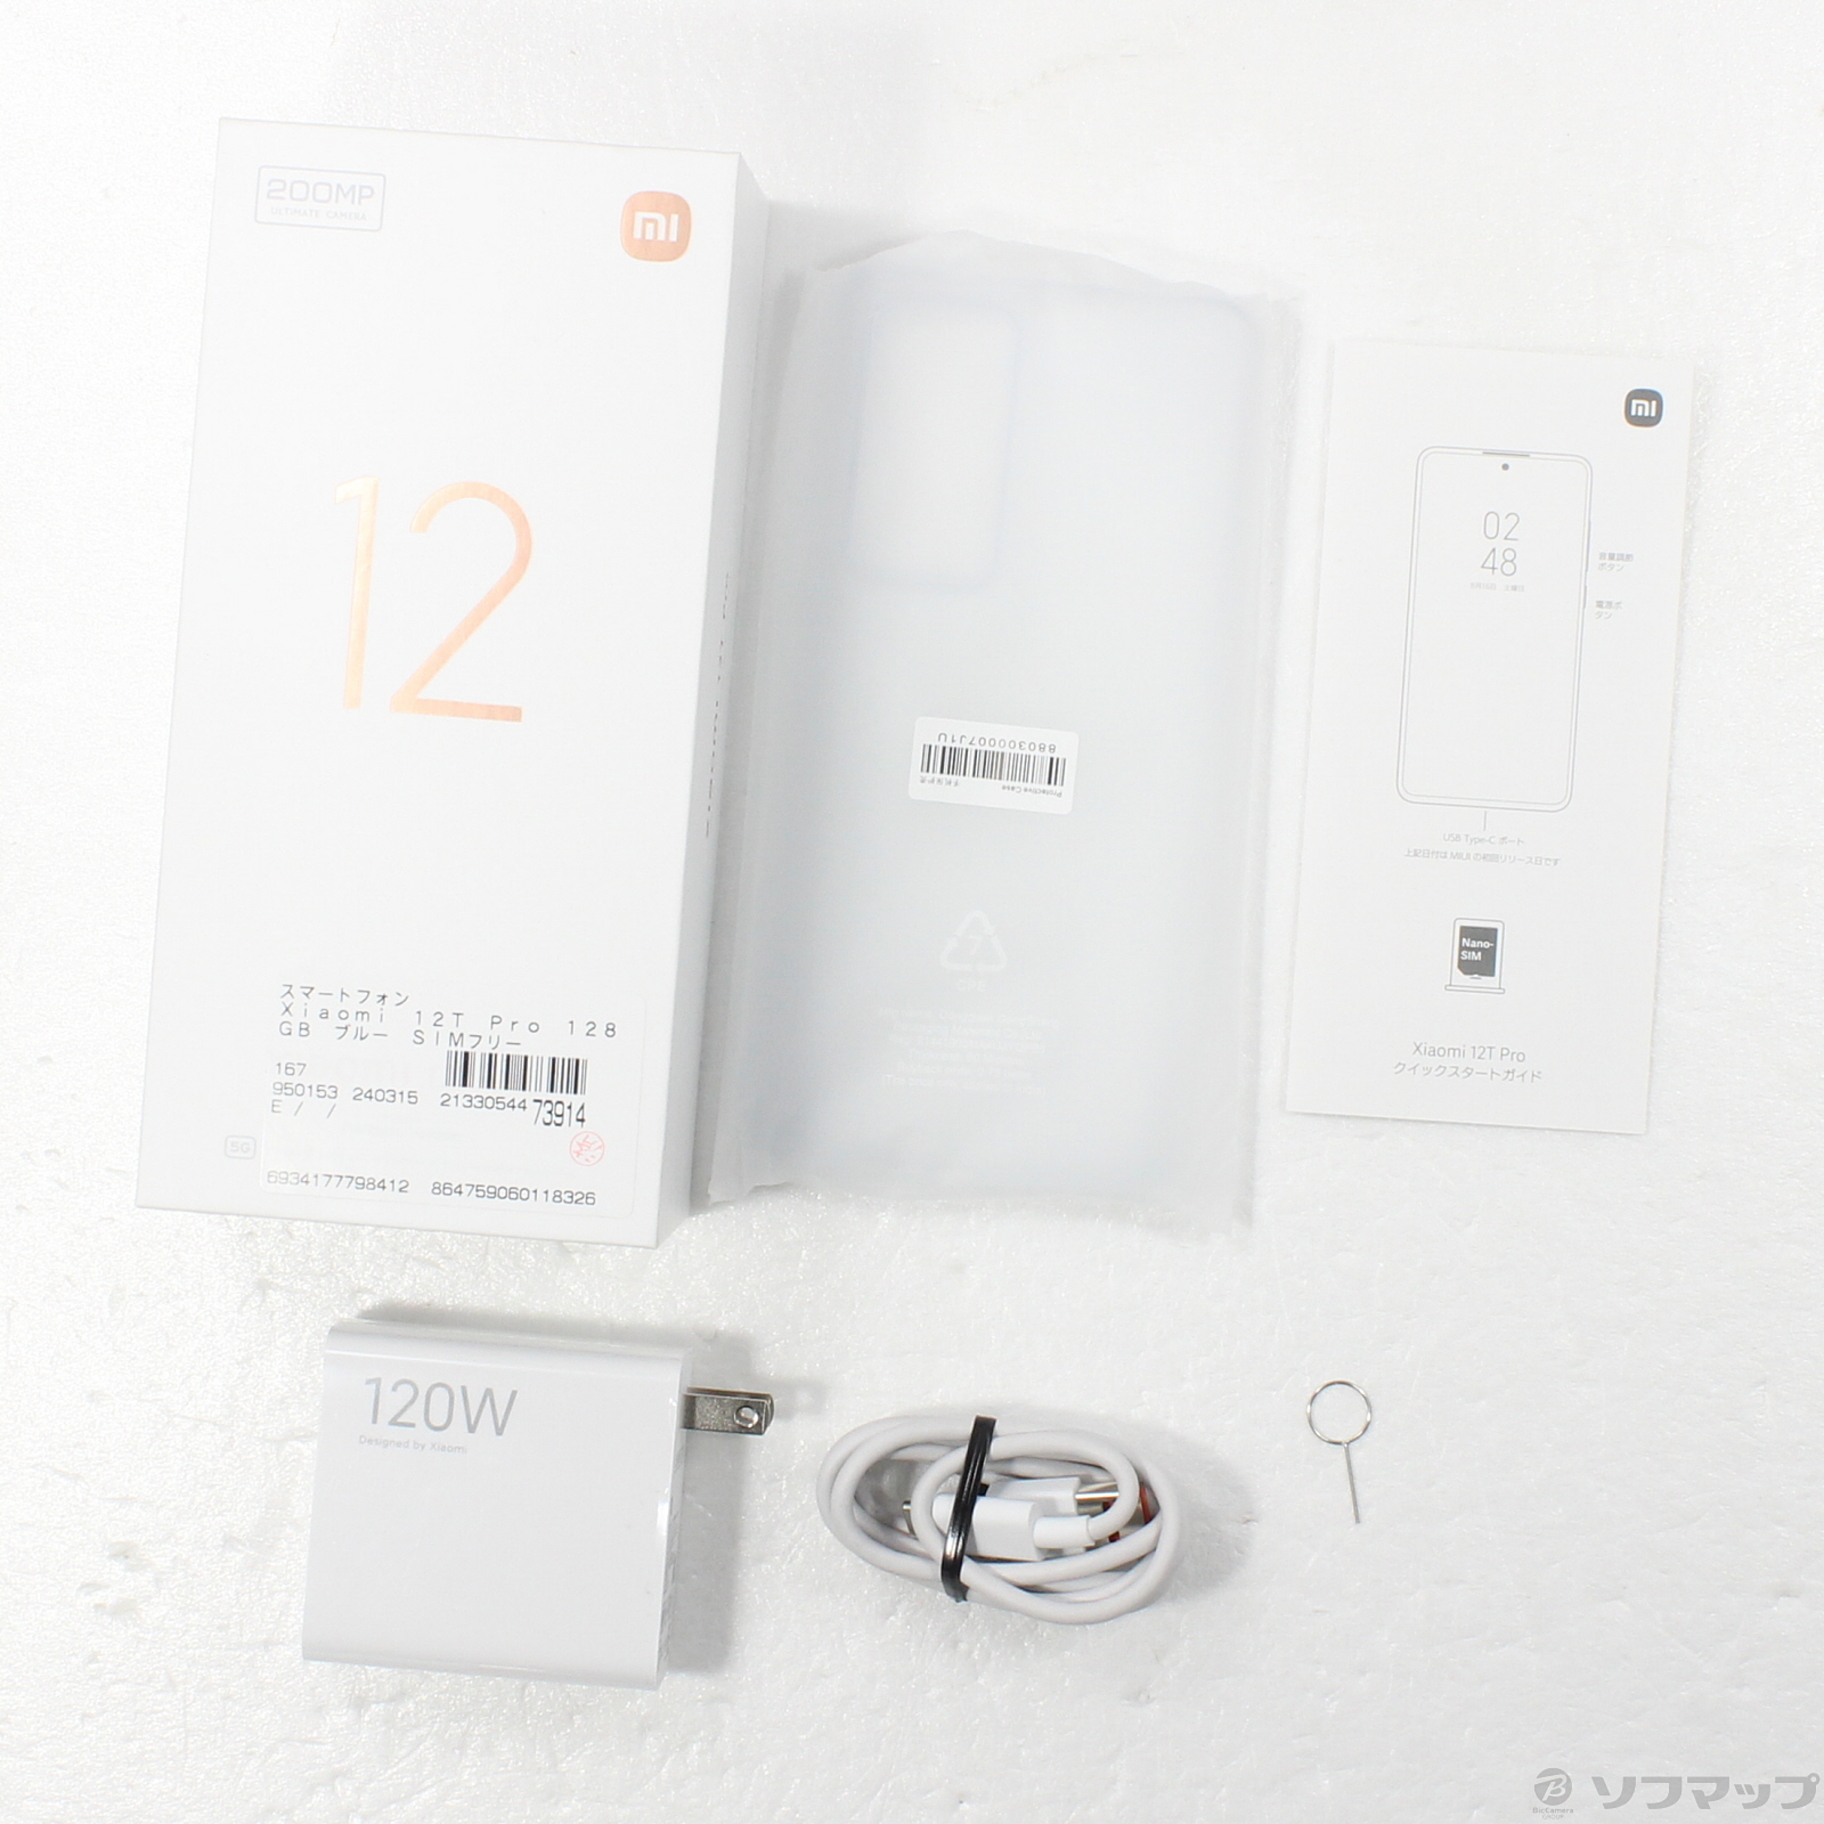 Xiaomi 12T Pro｜価格比較・SIMフリー・最新情報 - 価格.com